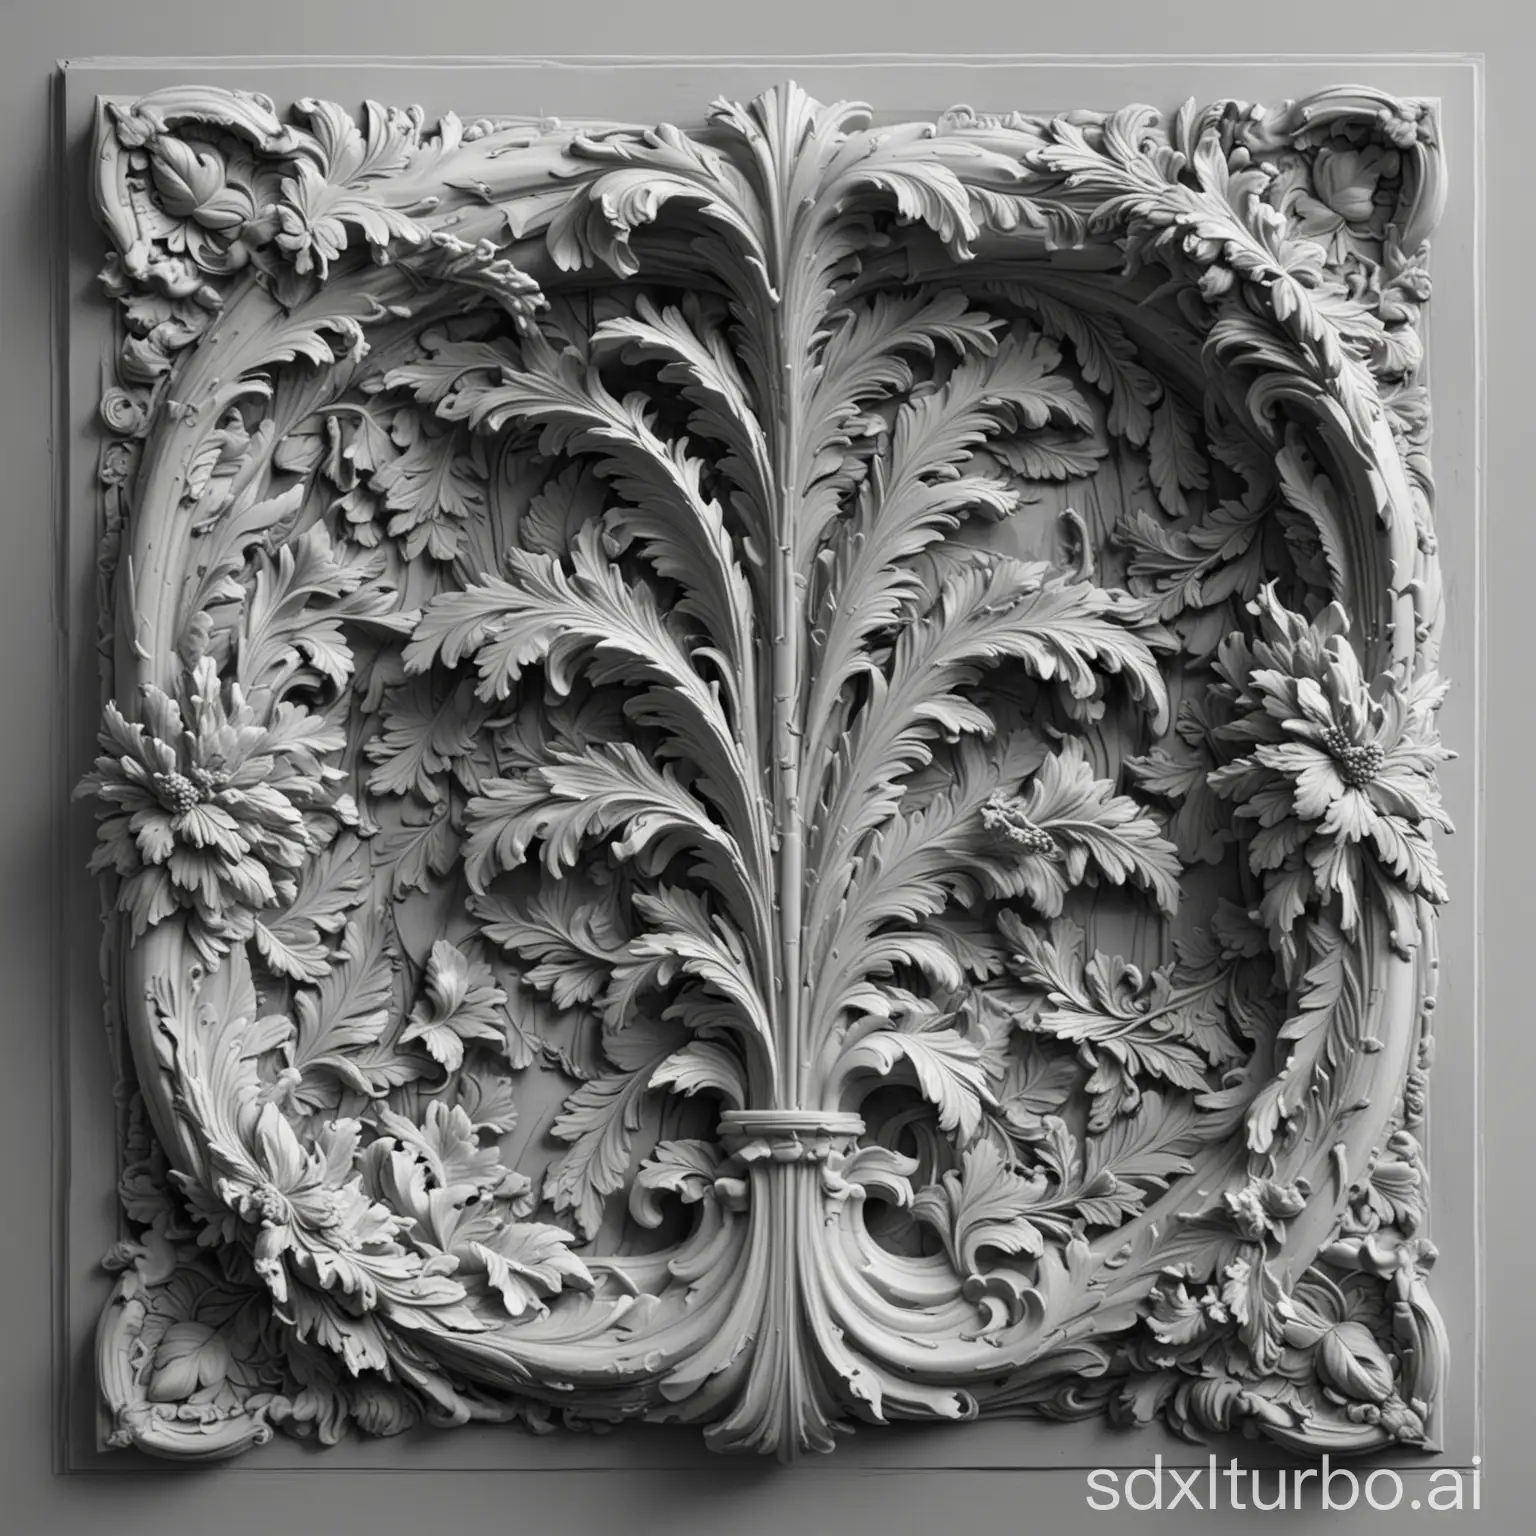 thin frame,acanthus,grayscale,depthmap,reliefs,sculpture,basrelief